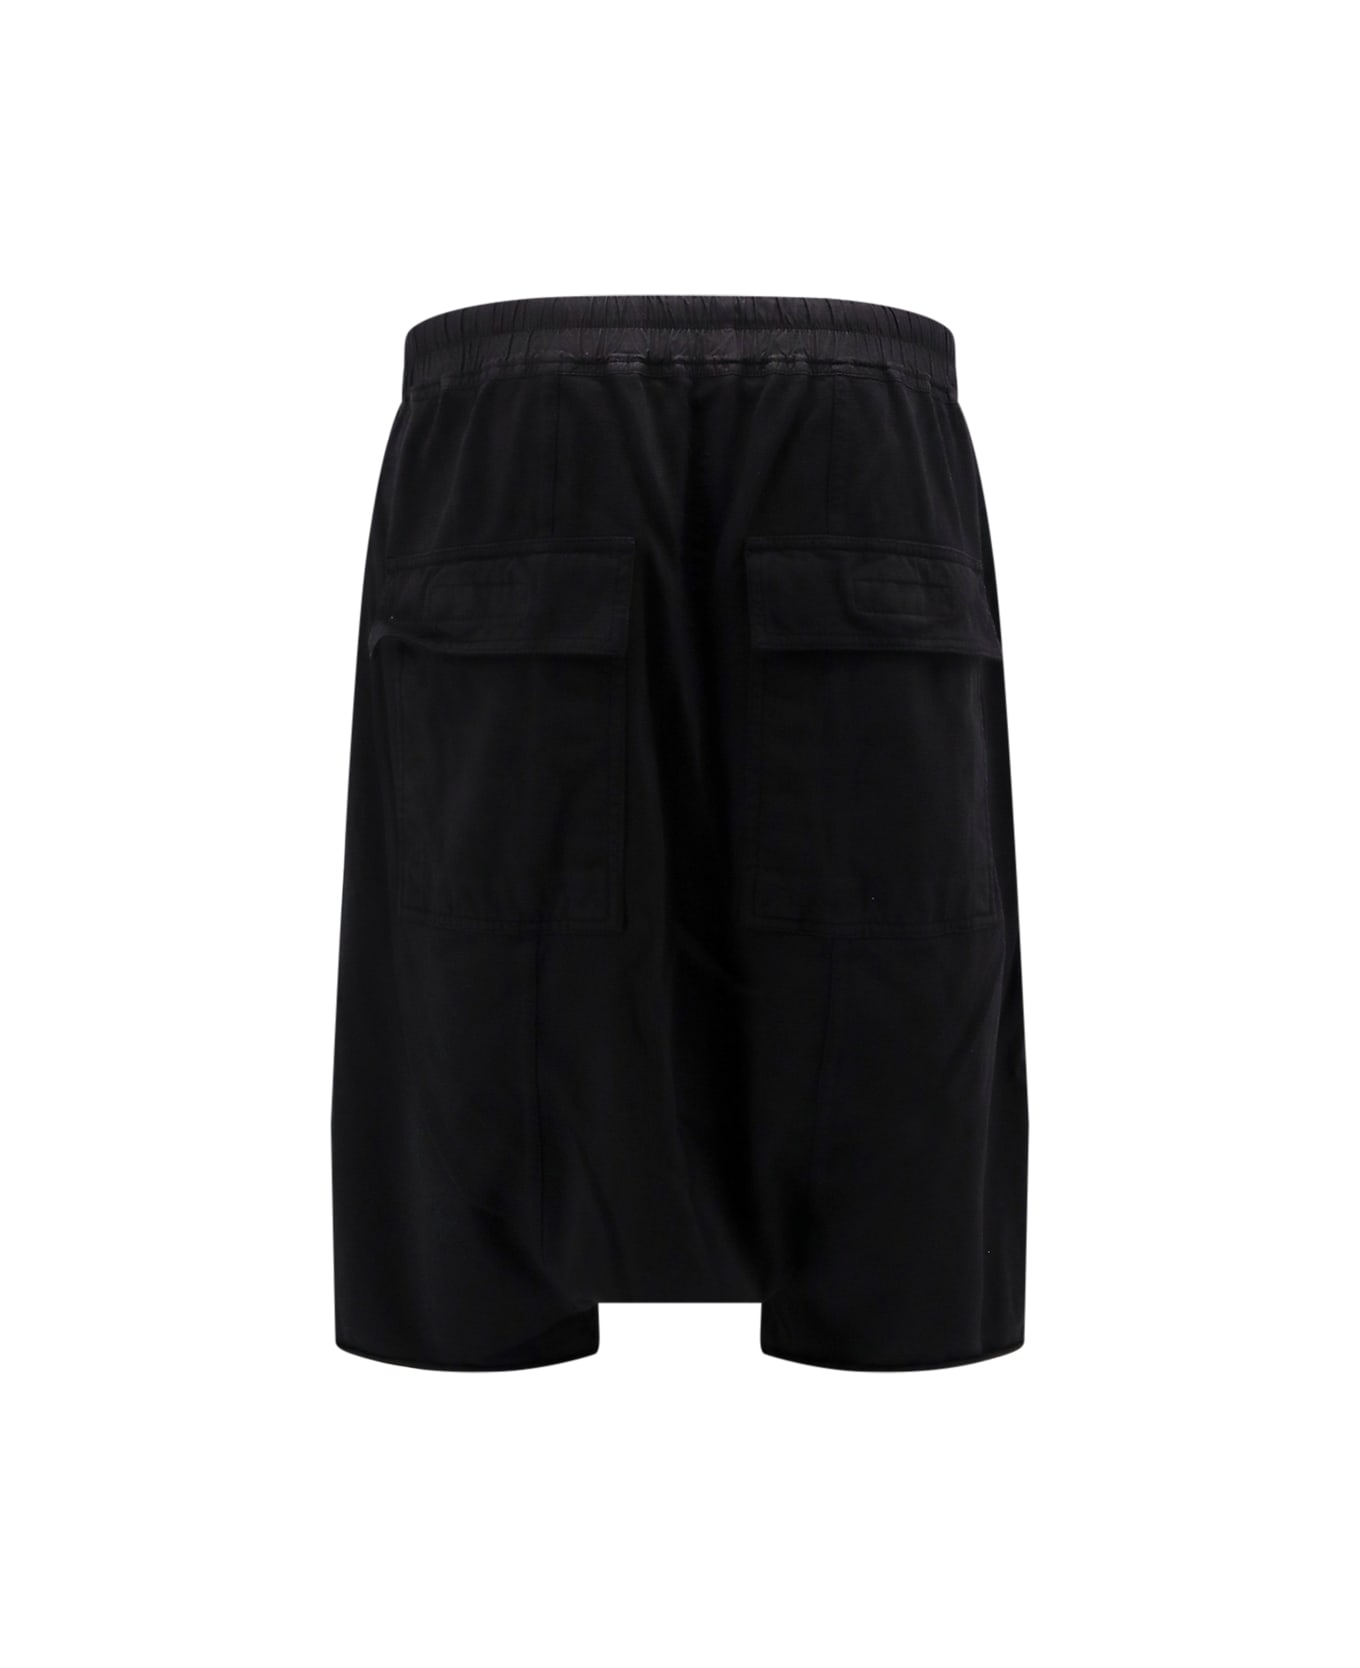 DRKSHDW Home Shorts - Black